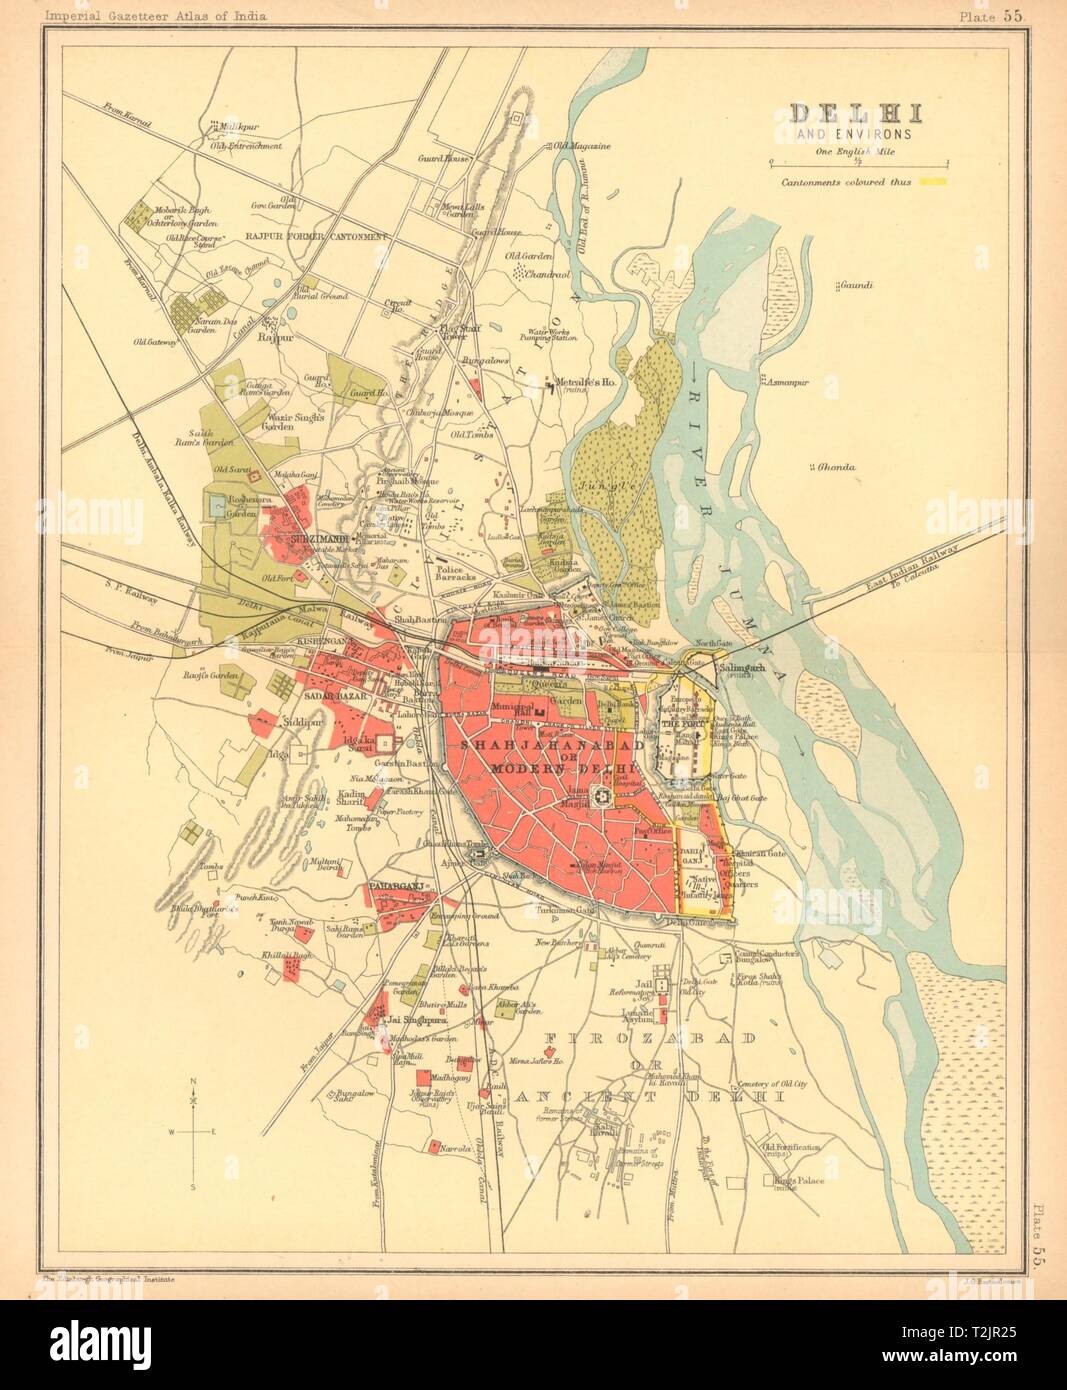 Delhi town city plan. Key buildings & Cantonment. British India 1909 old map Stock Photo